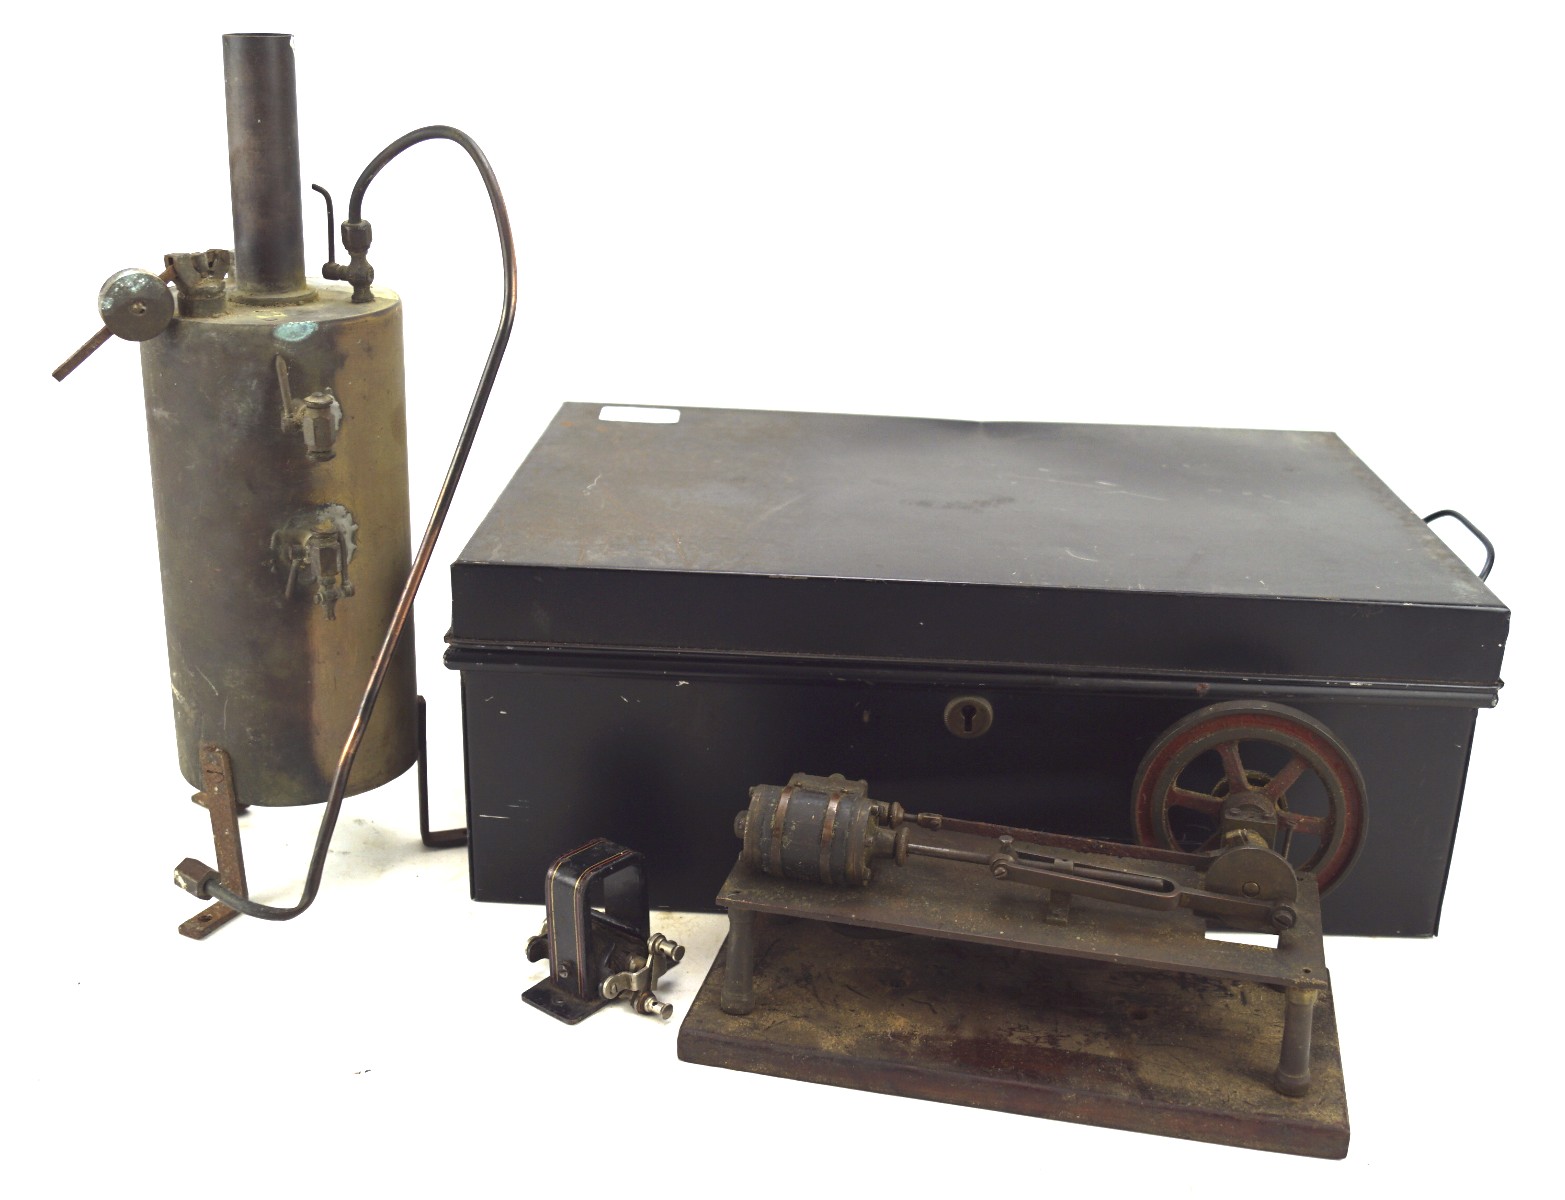 A self built steam engine within a black metal box